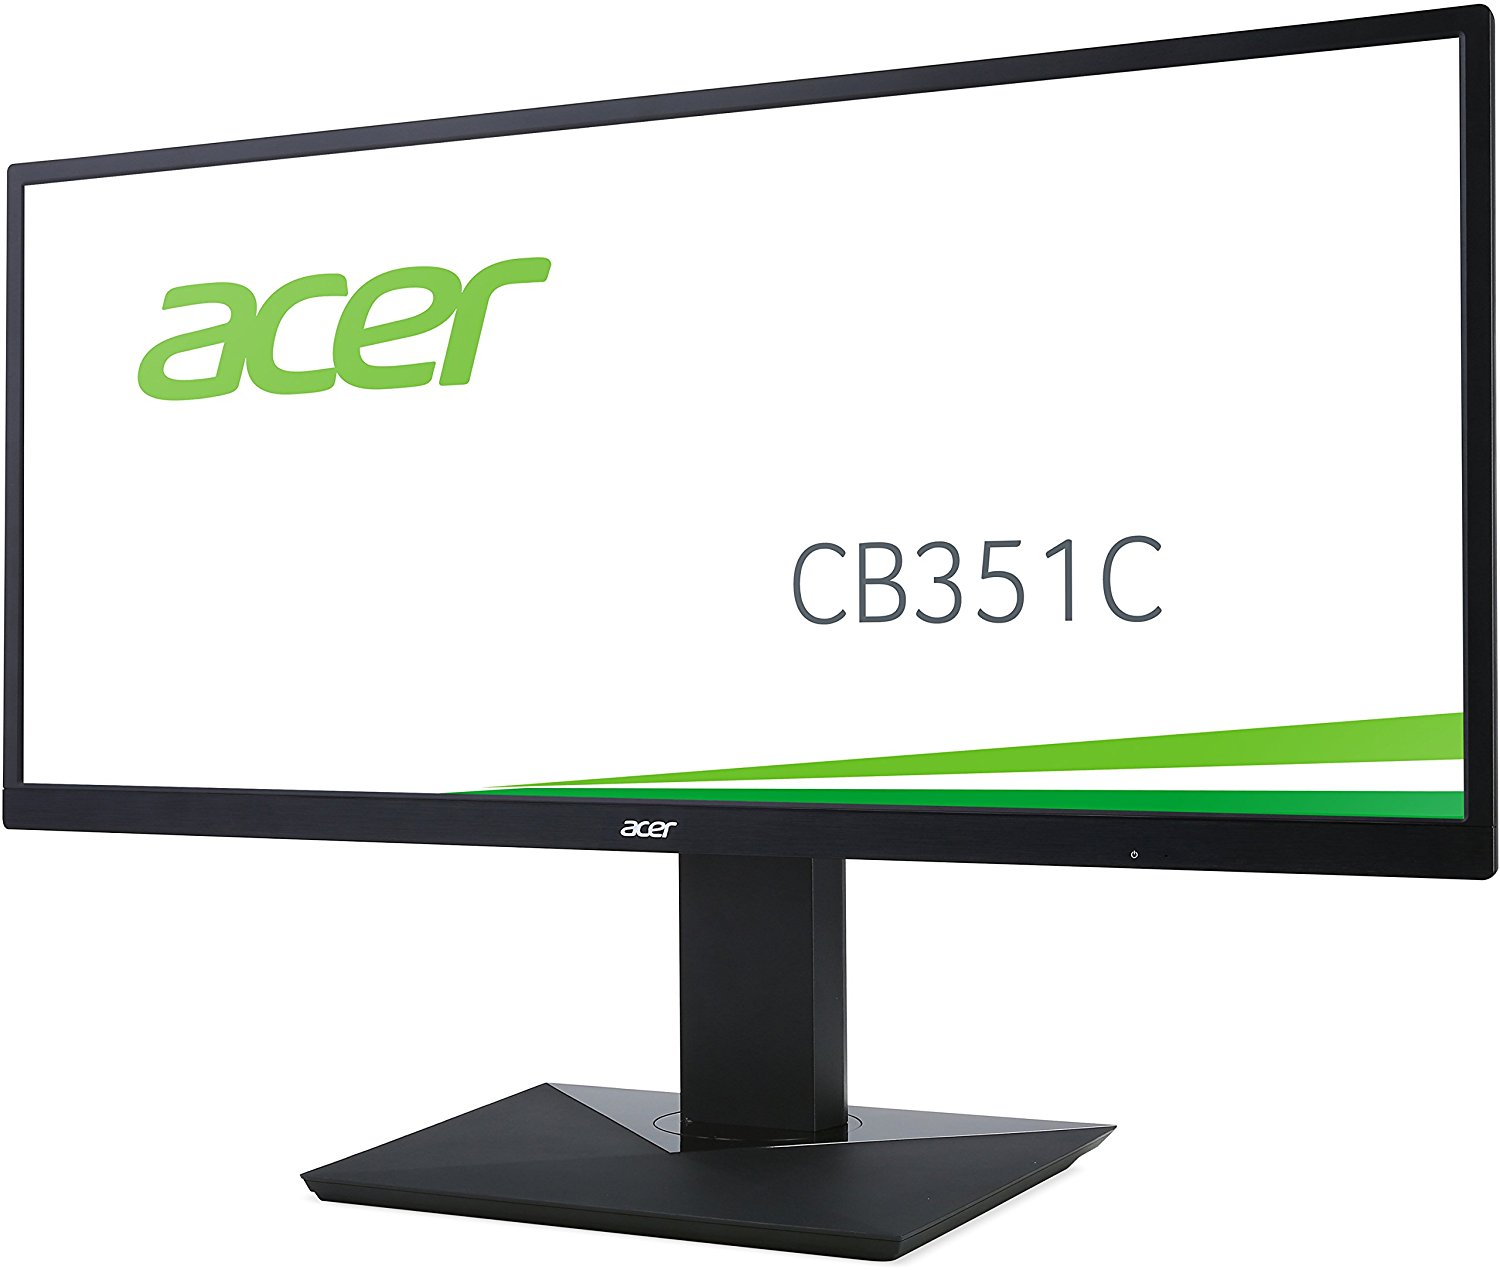 Acer CB351C 35 inch 21:9 UltraWide 2560 x 1080 4ms DVI-DL HDMI DP USB3.0 Black LED Monitor - image 2 of 6